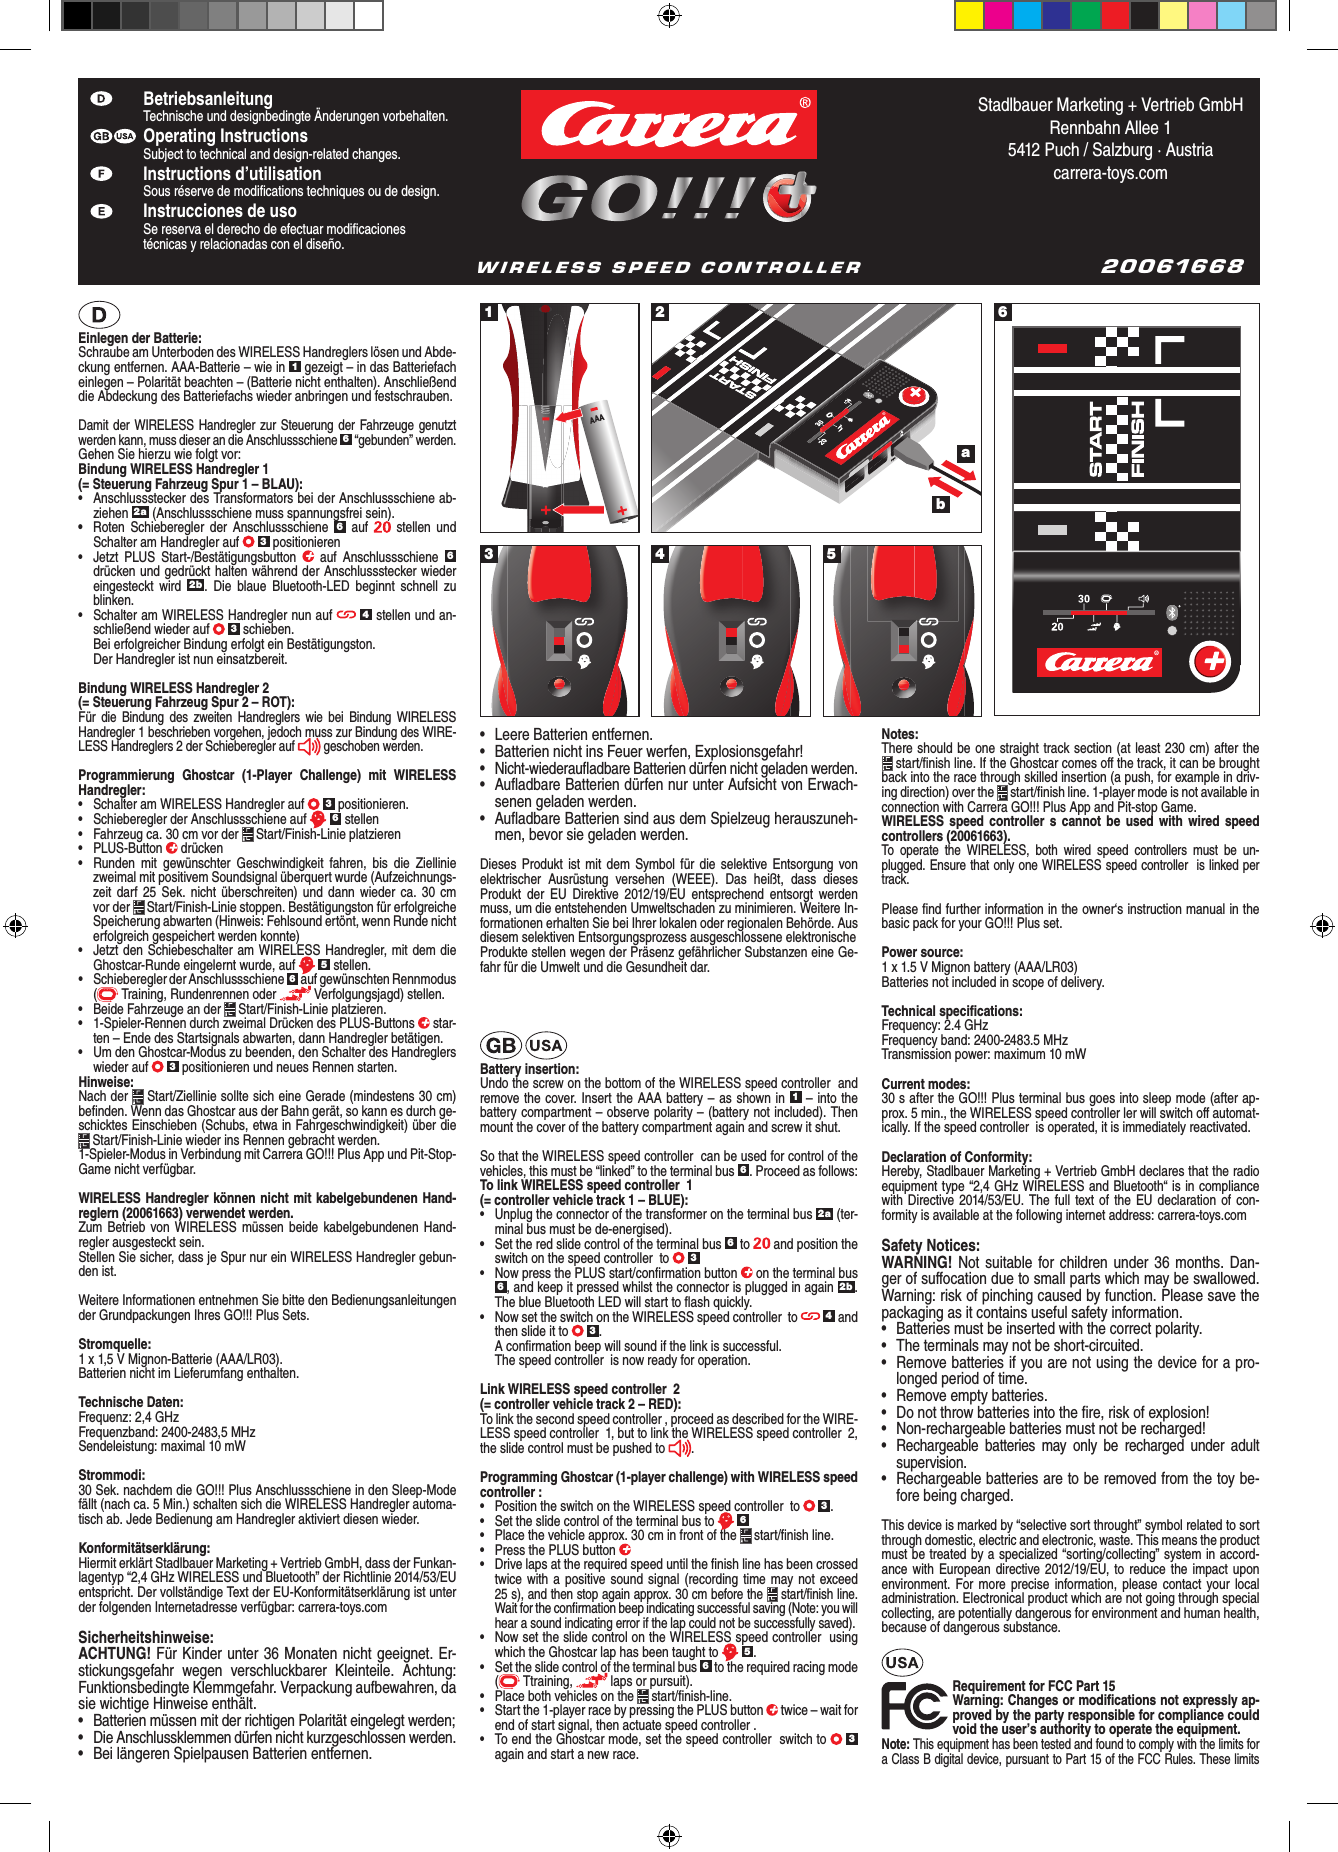 Carrera Toys 20061668 GO Plus WIRELESS+Speed Controller User Manual